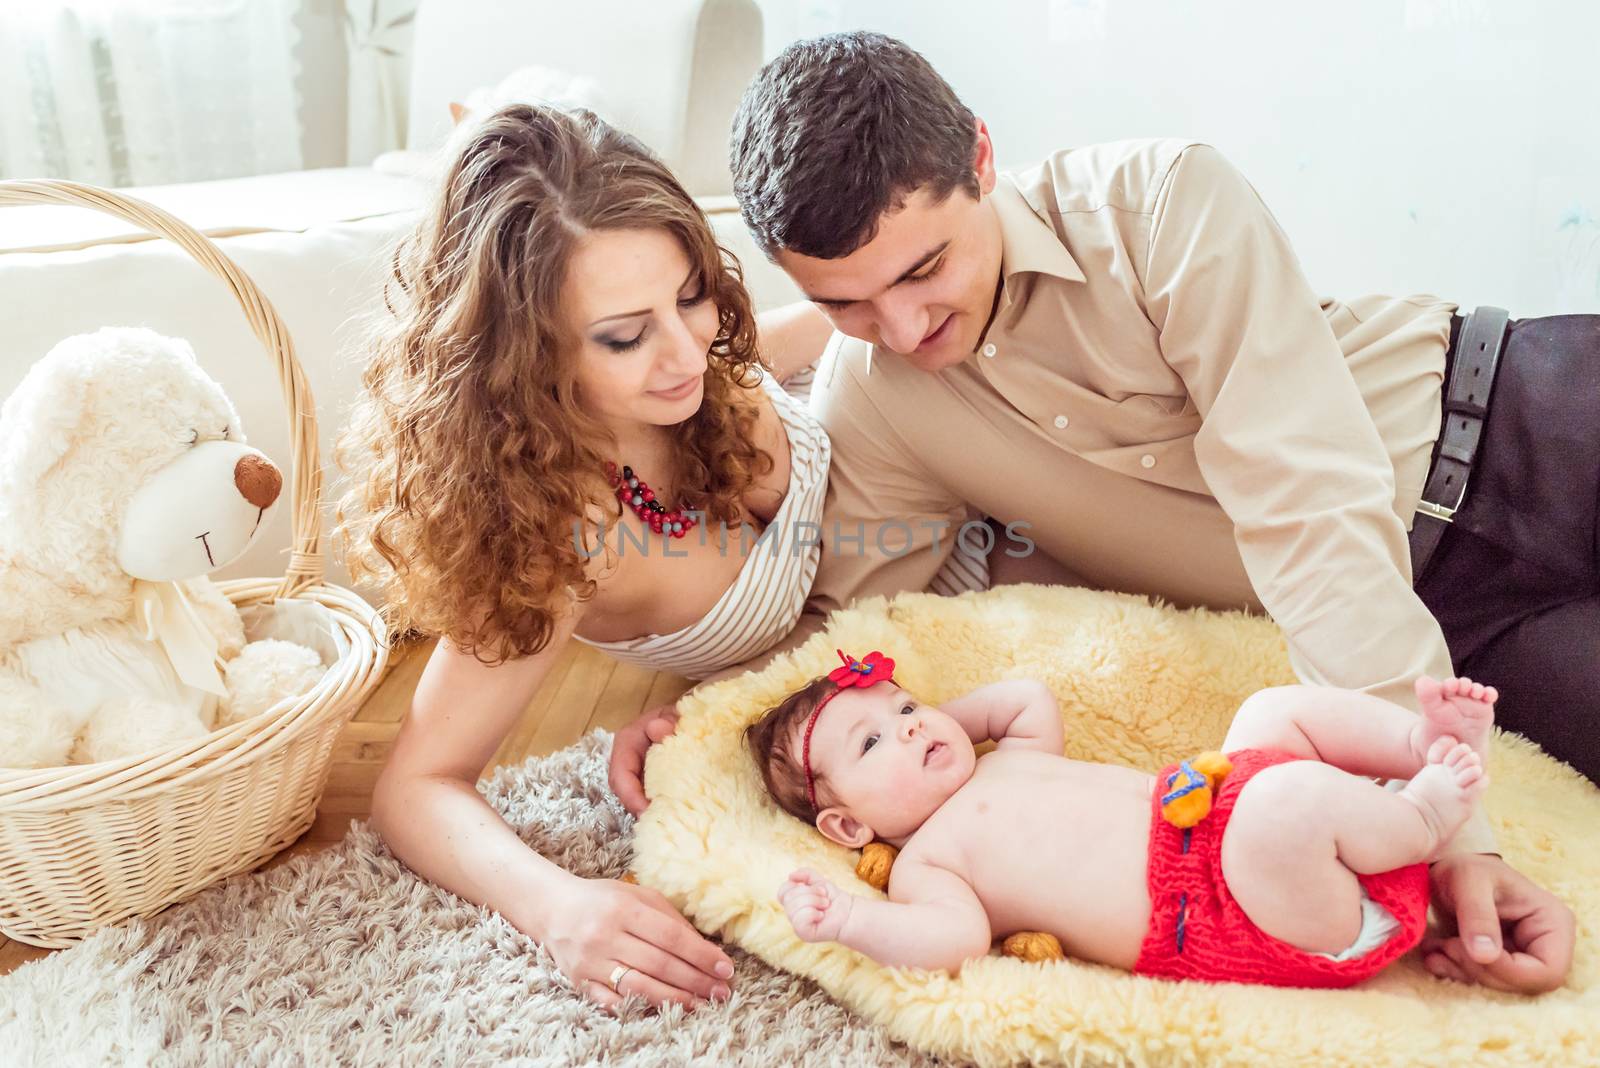 naked baby with her parents by okskukuruza